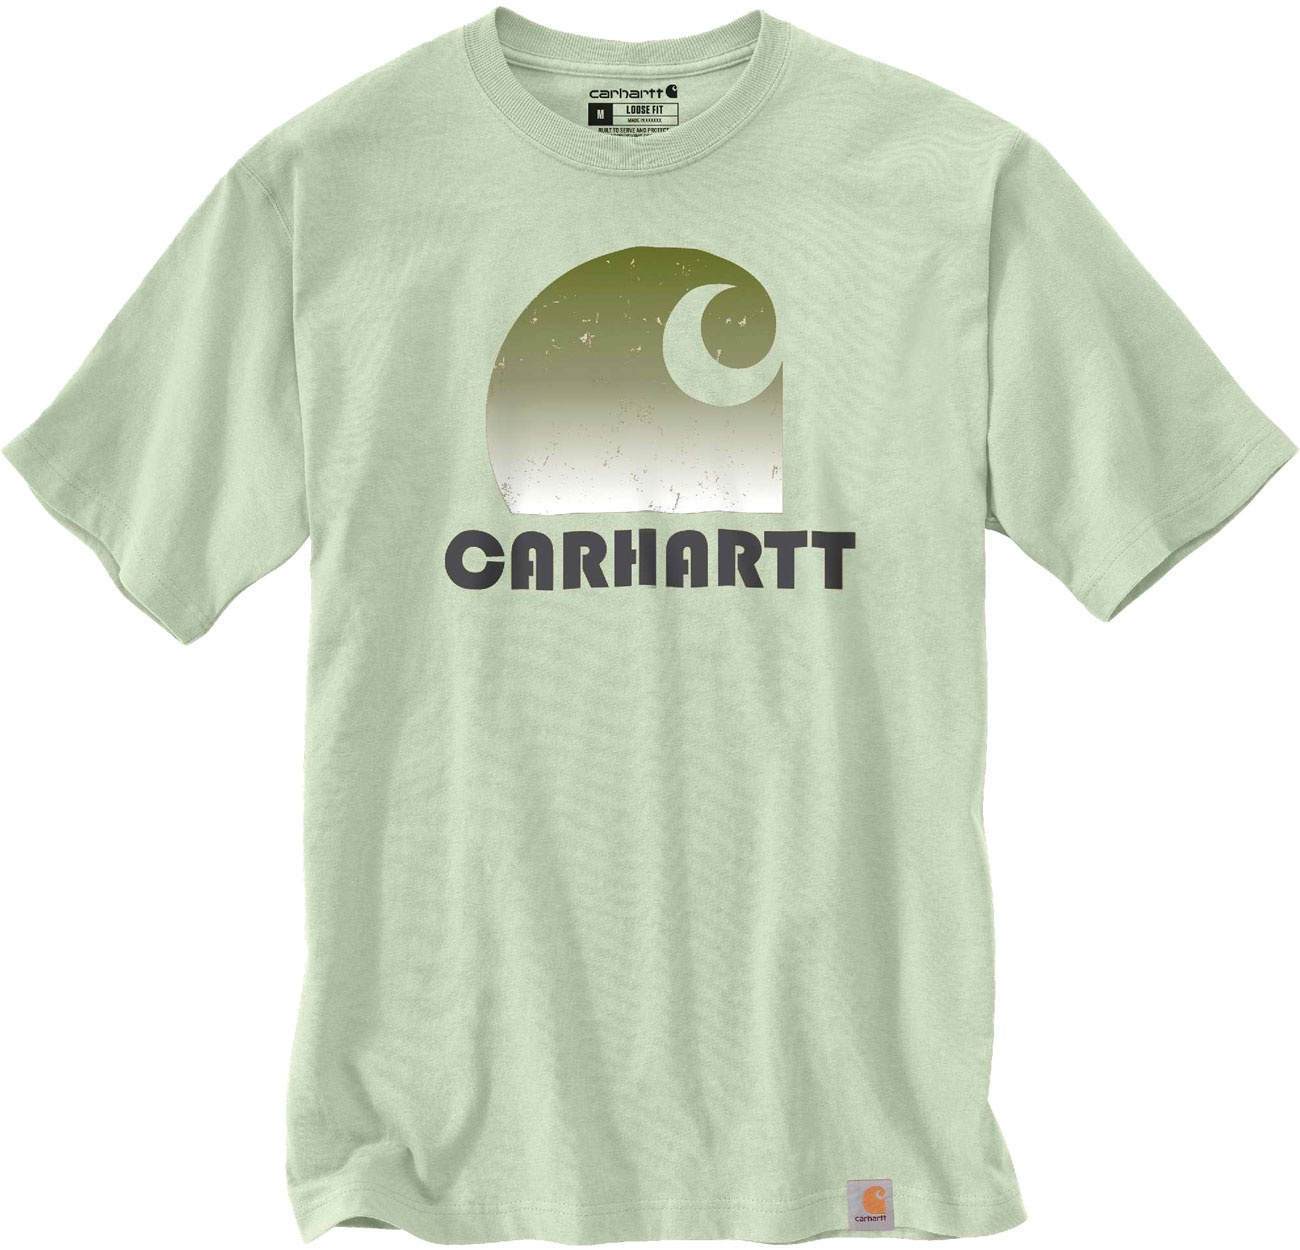 Carhartt Heavy Graphic, t-shirt - Vert Clair/Vert (Gf3) - M